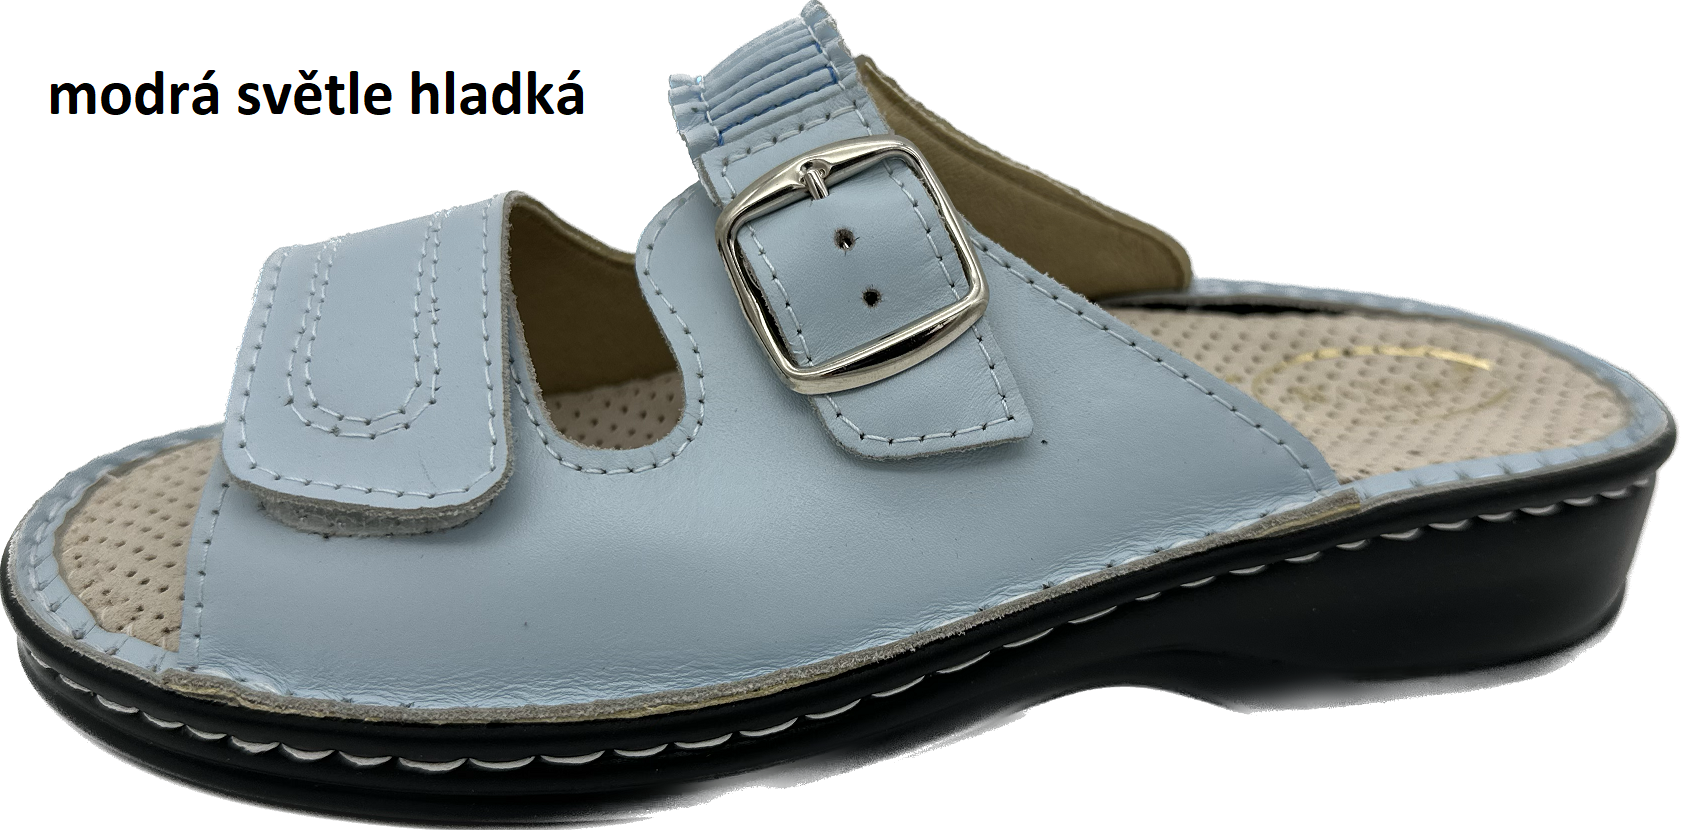 Boty Hanák vzor 305 - SKLADEM Barva usně: modrá tmavě hladká, Velikosti obuvi: 38